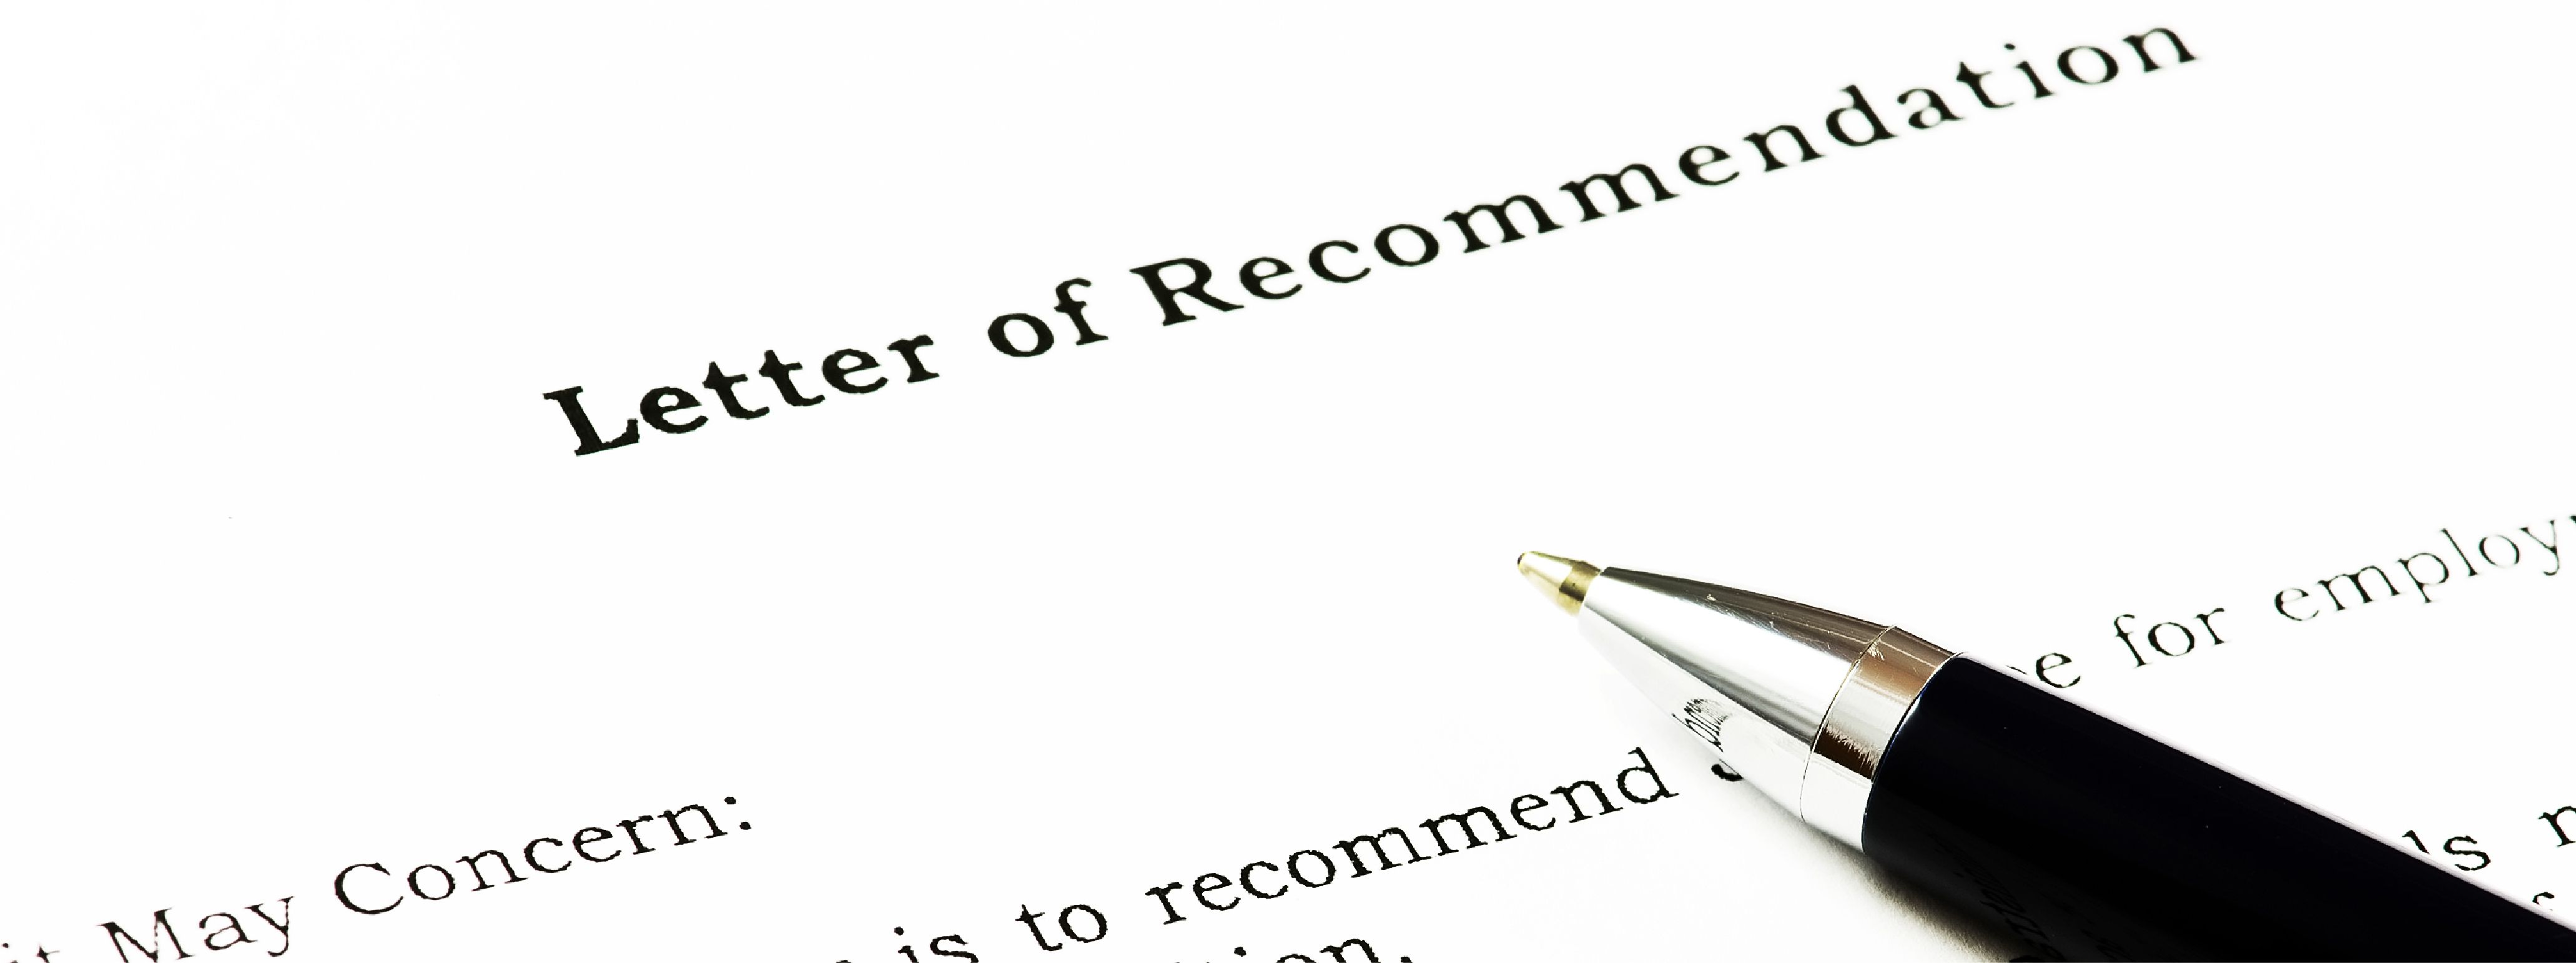 Pastor Recommendation Letter For Student Admission Sample